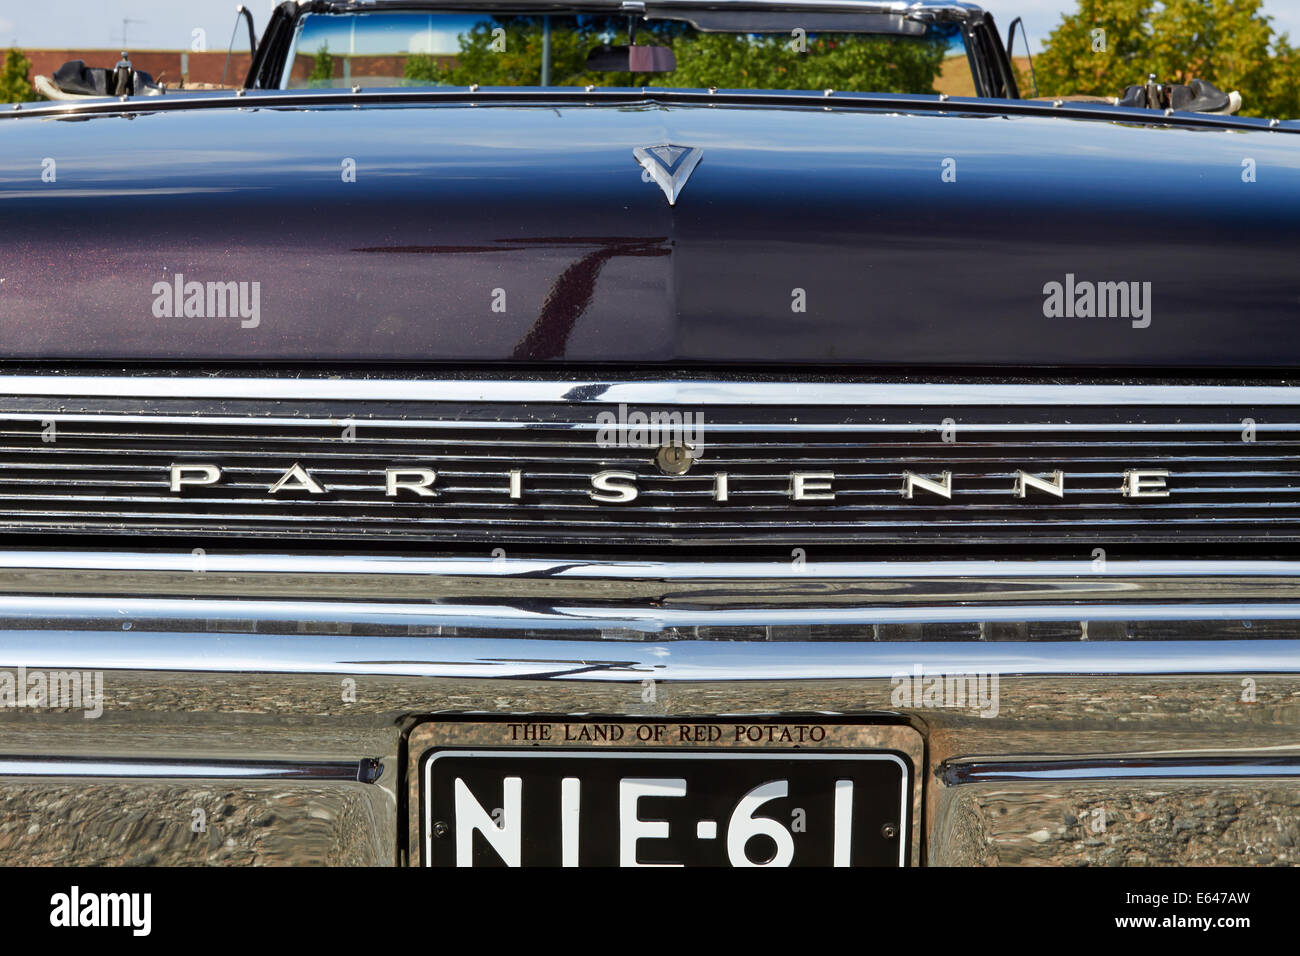 1960s Pontiac Parisienne rear detail Stock Photo